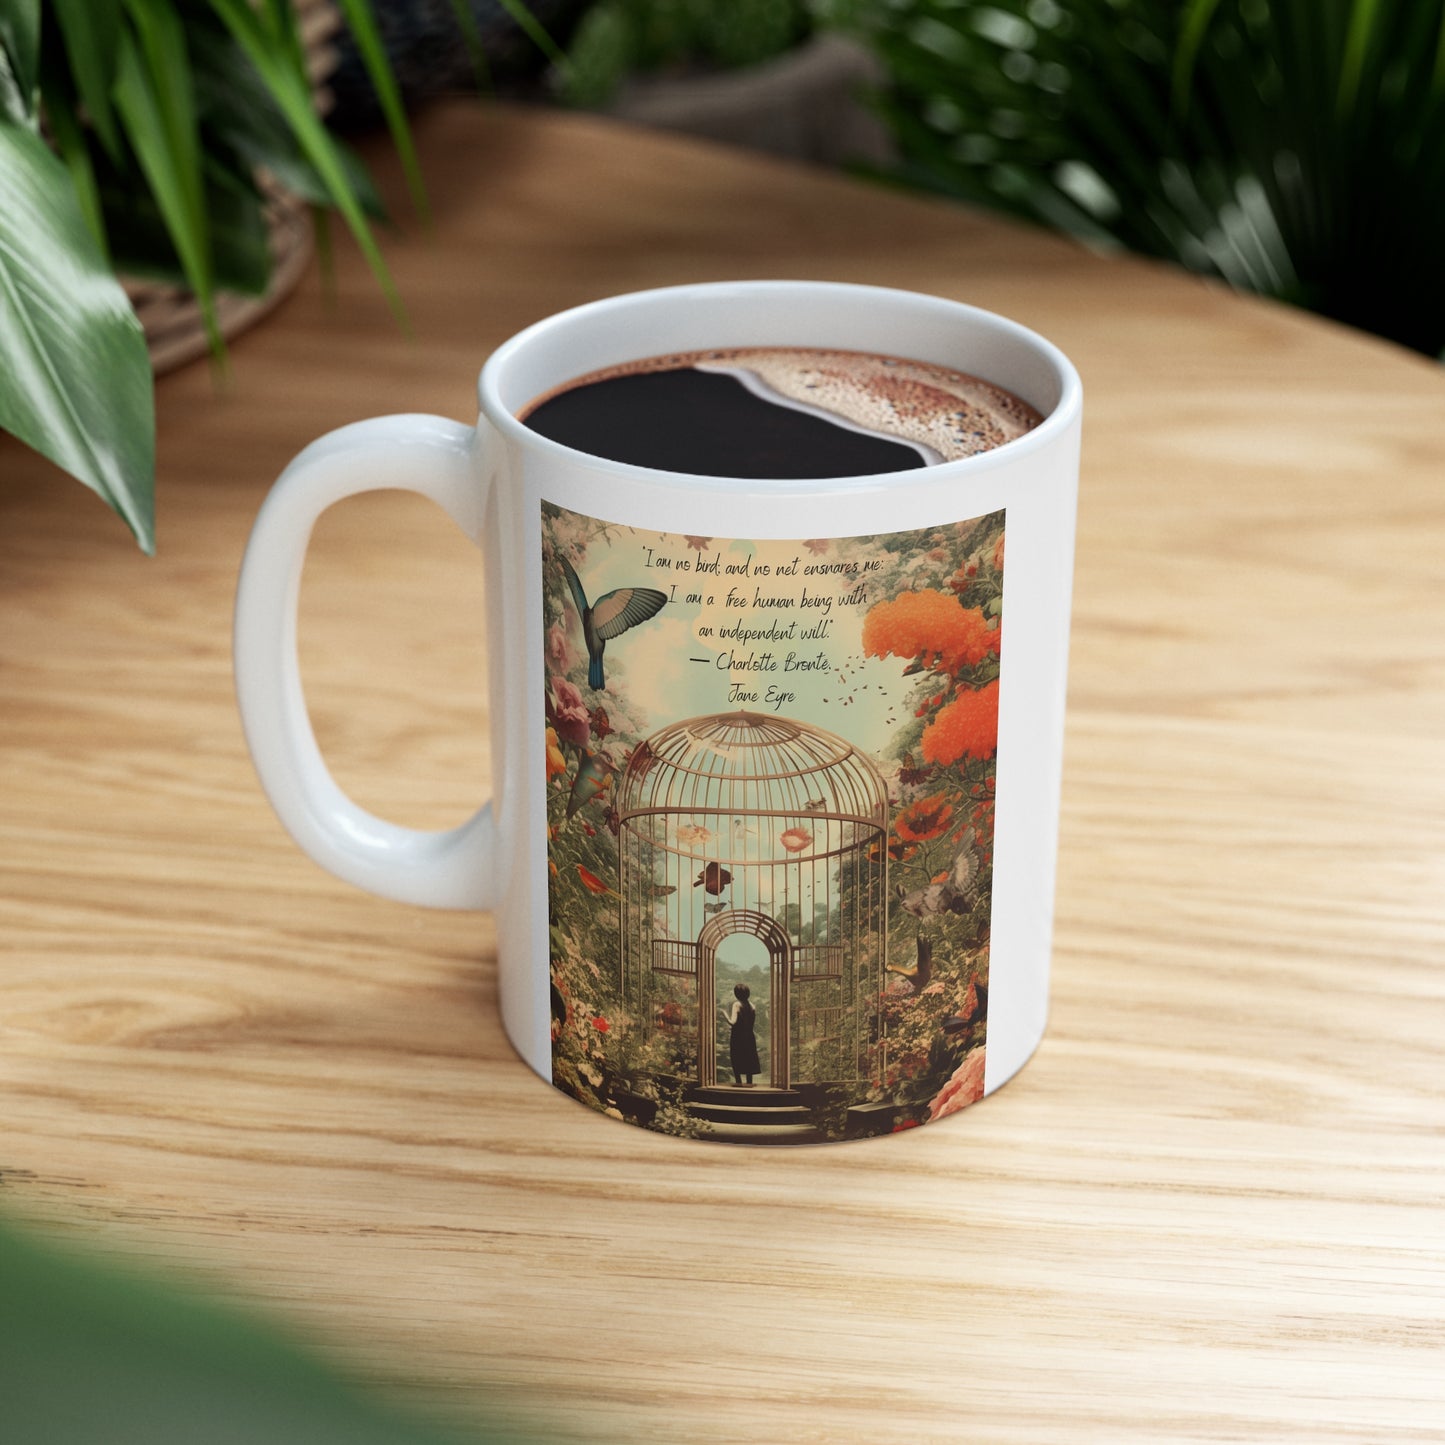 Freedom Spirit Ceramic Mug - Charlotte Bronte's Jane Eyre Inspiration.